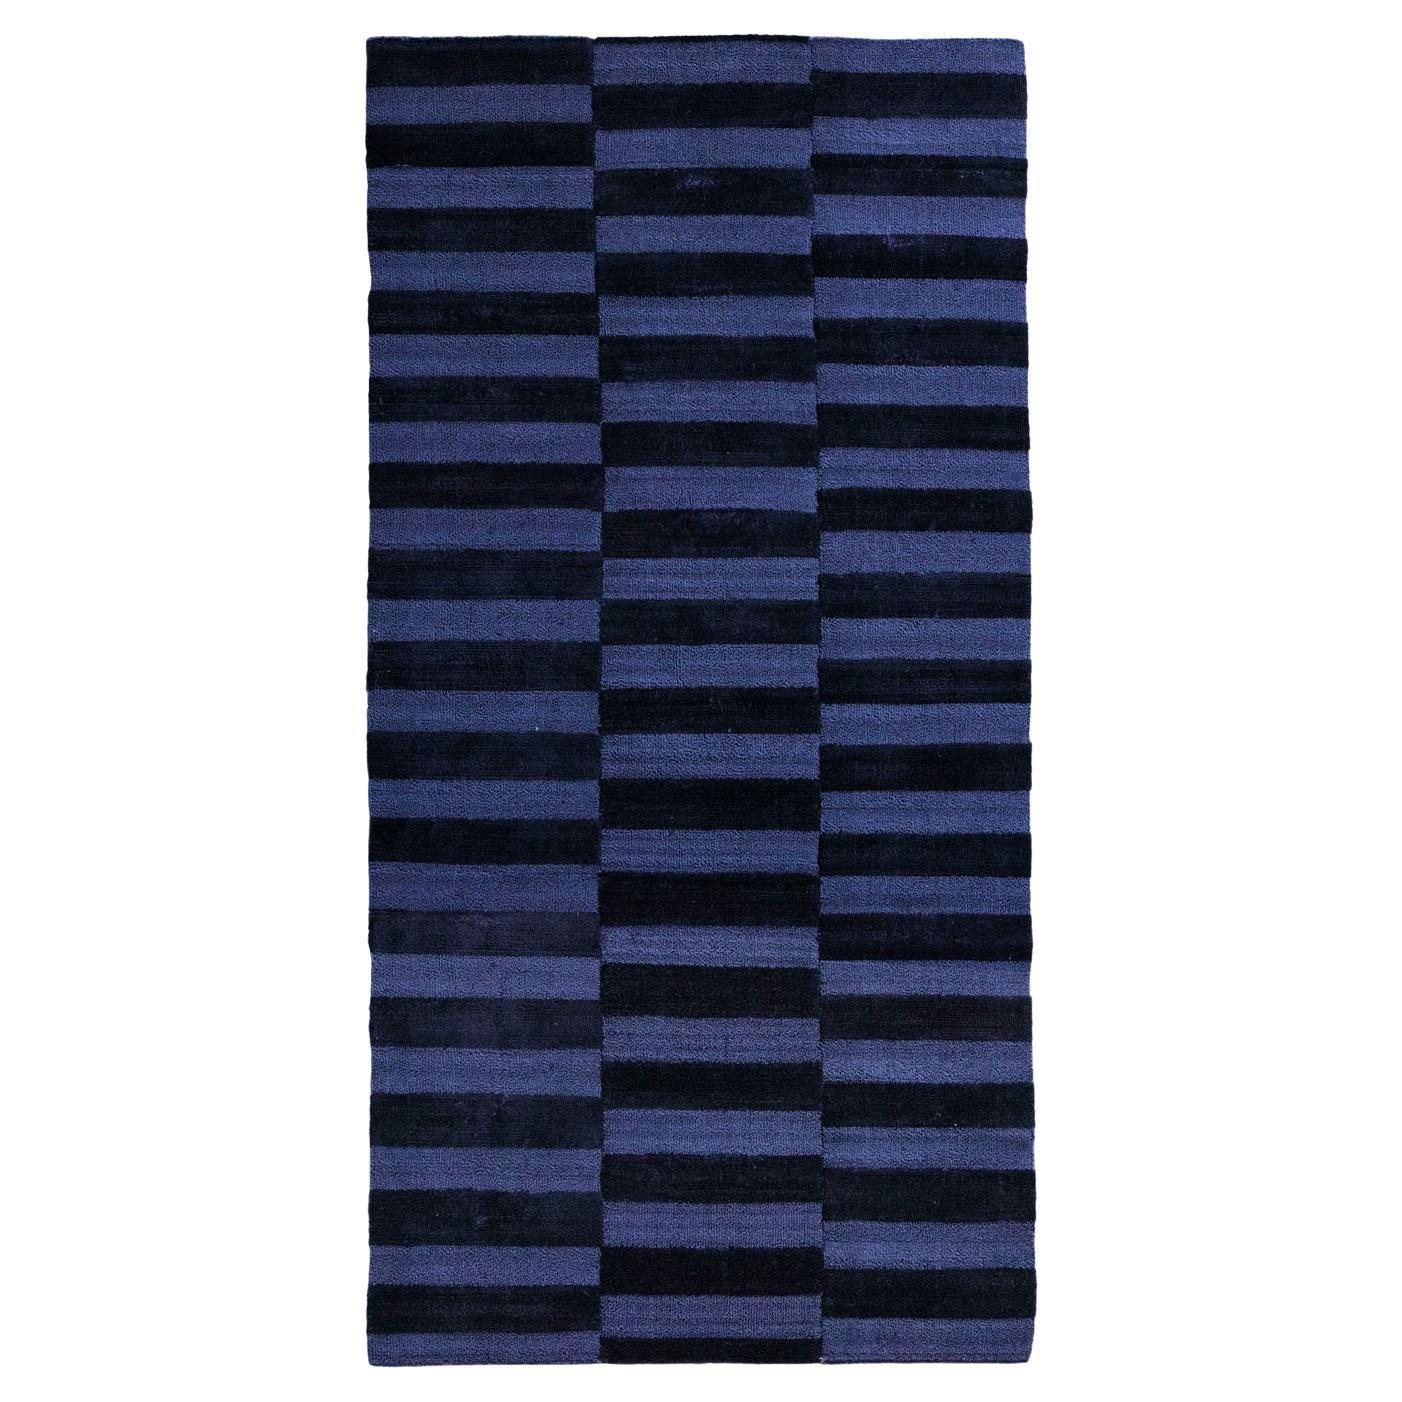 Contemporary Striped Luxury Shiny Velvety Blue Rug von Deanna Comellini 150x300cm